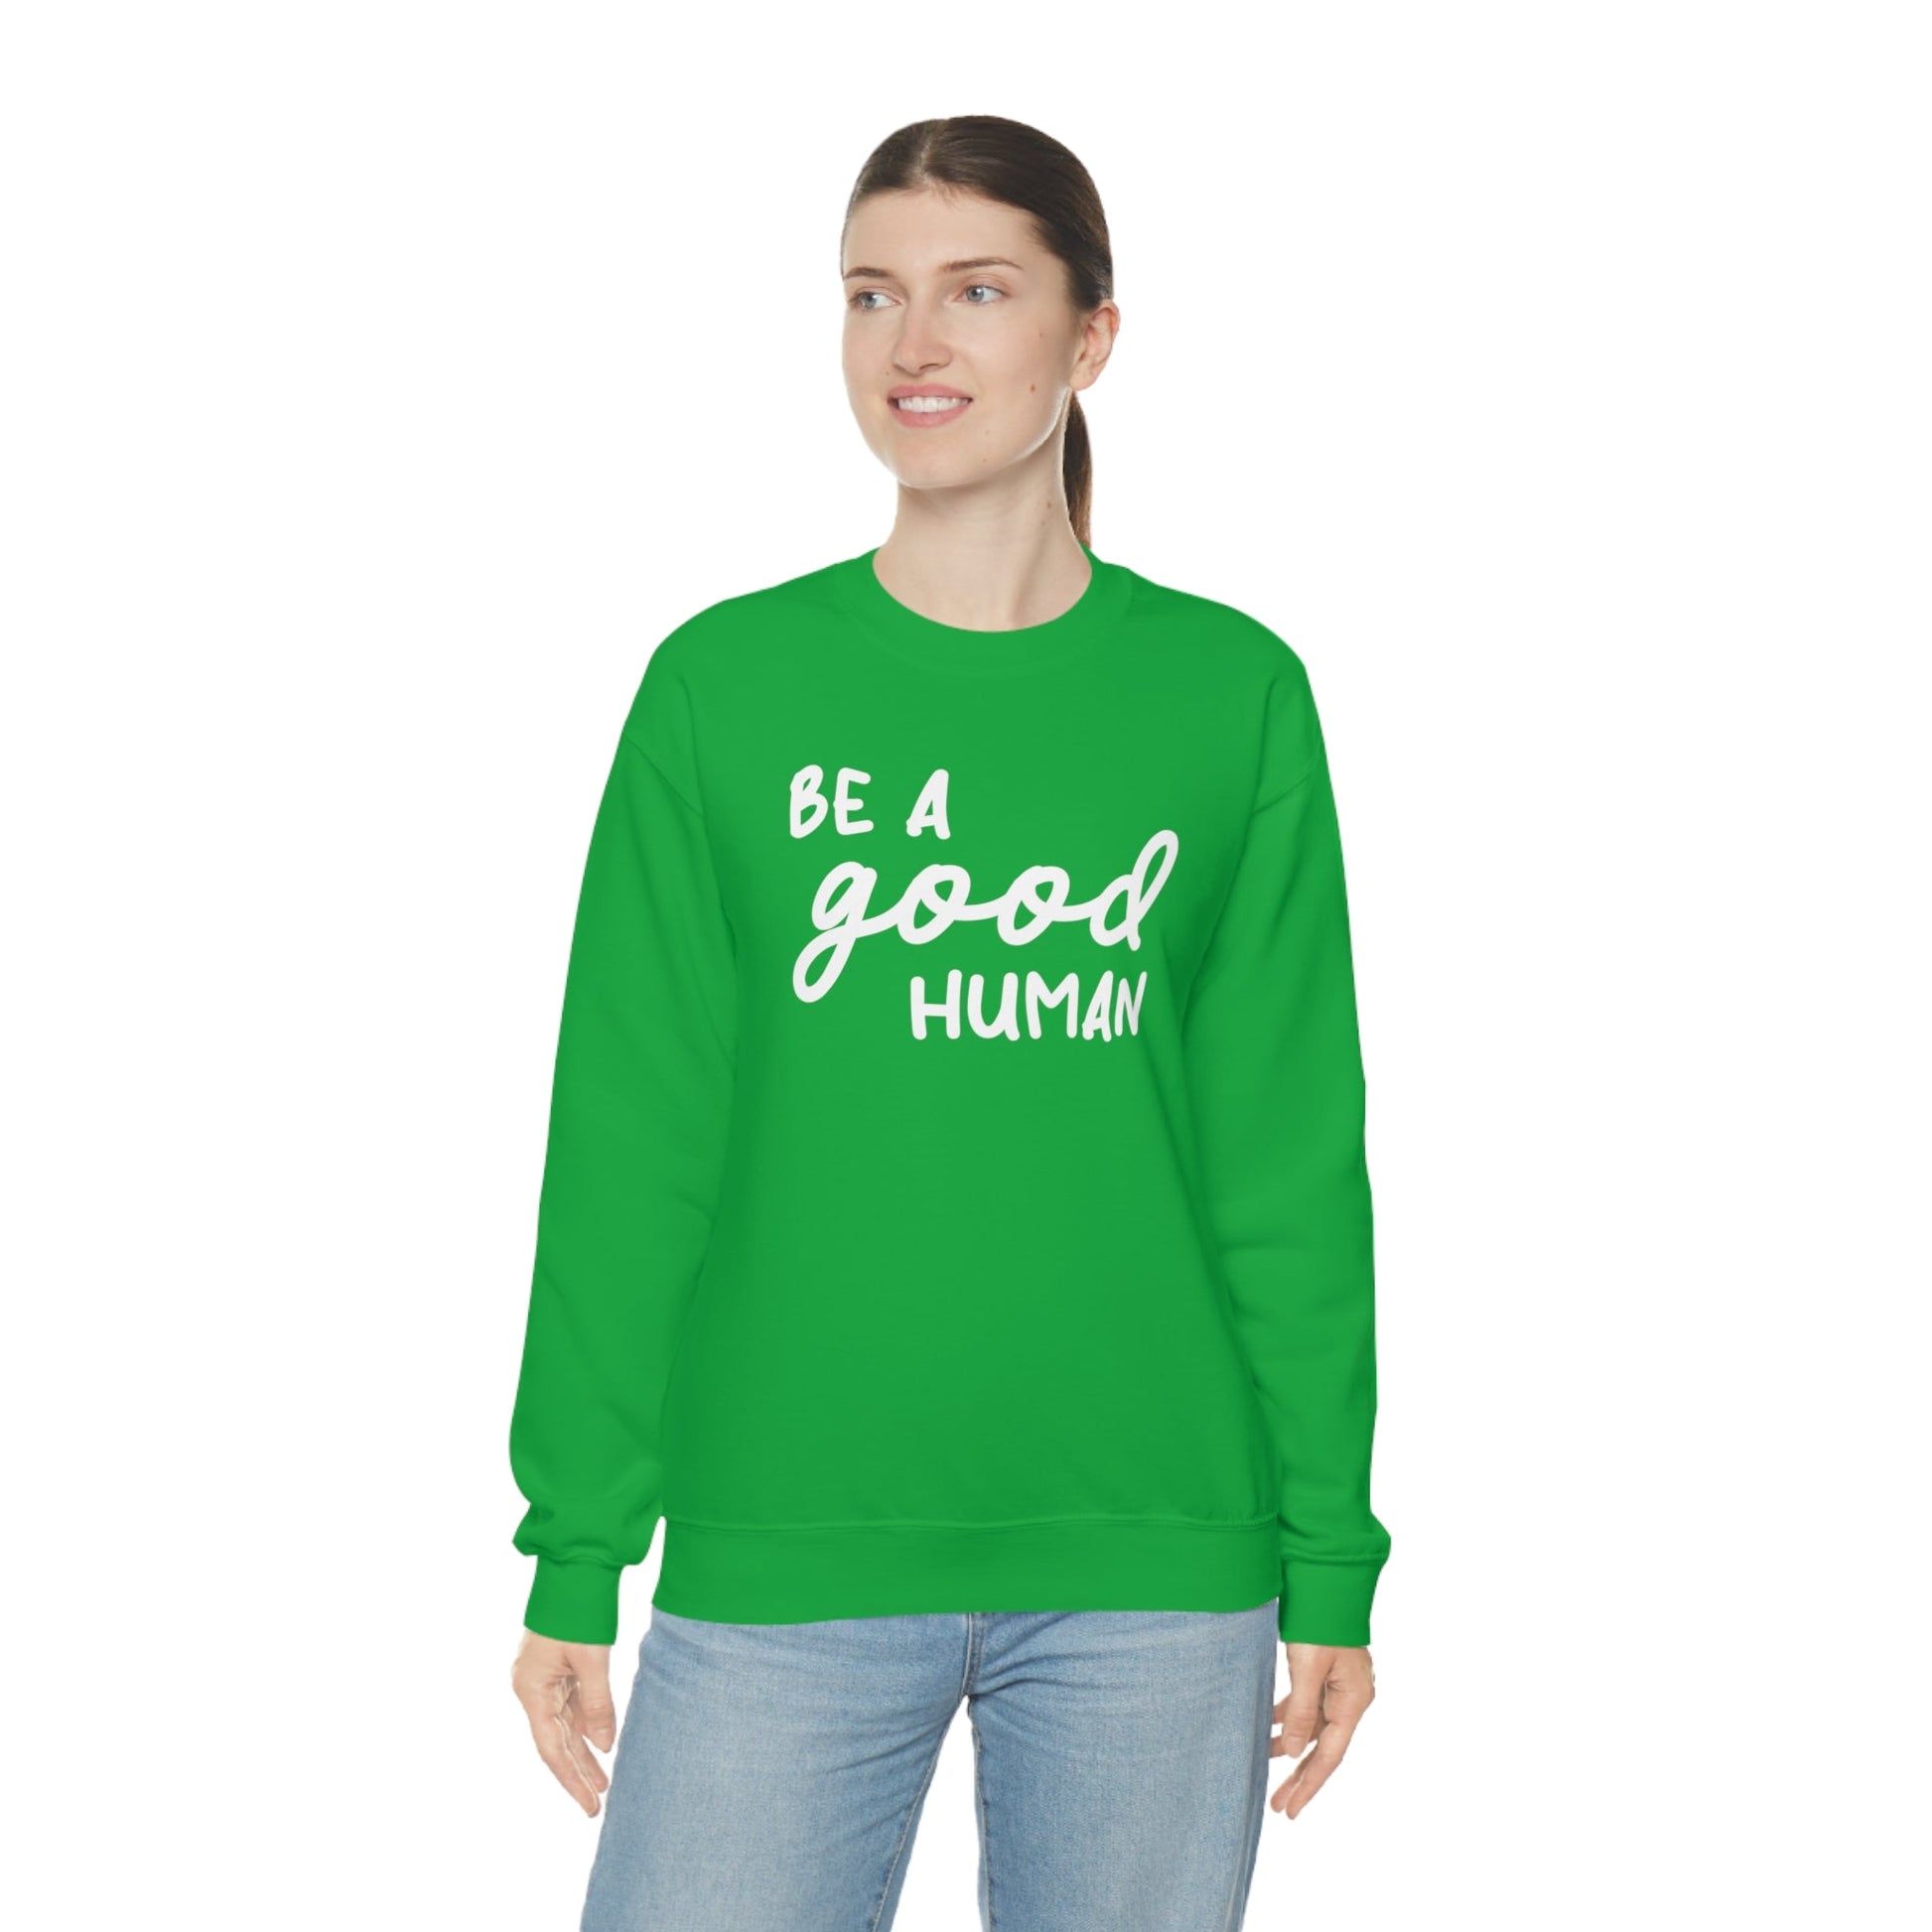 Be A Good Human | Crewneck Sweatshirt - Detezi Designs-18256139091812606974